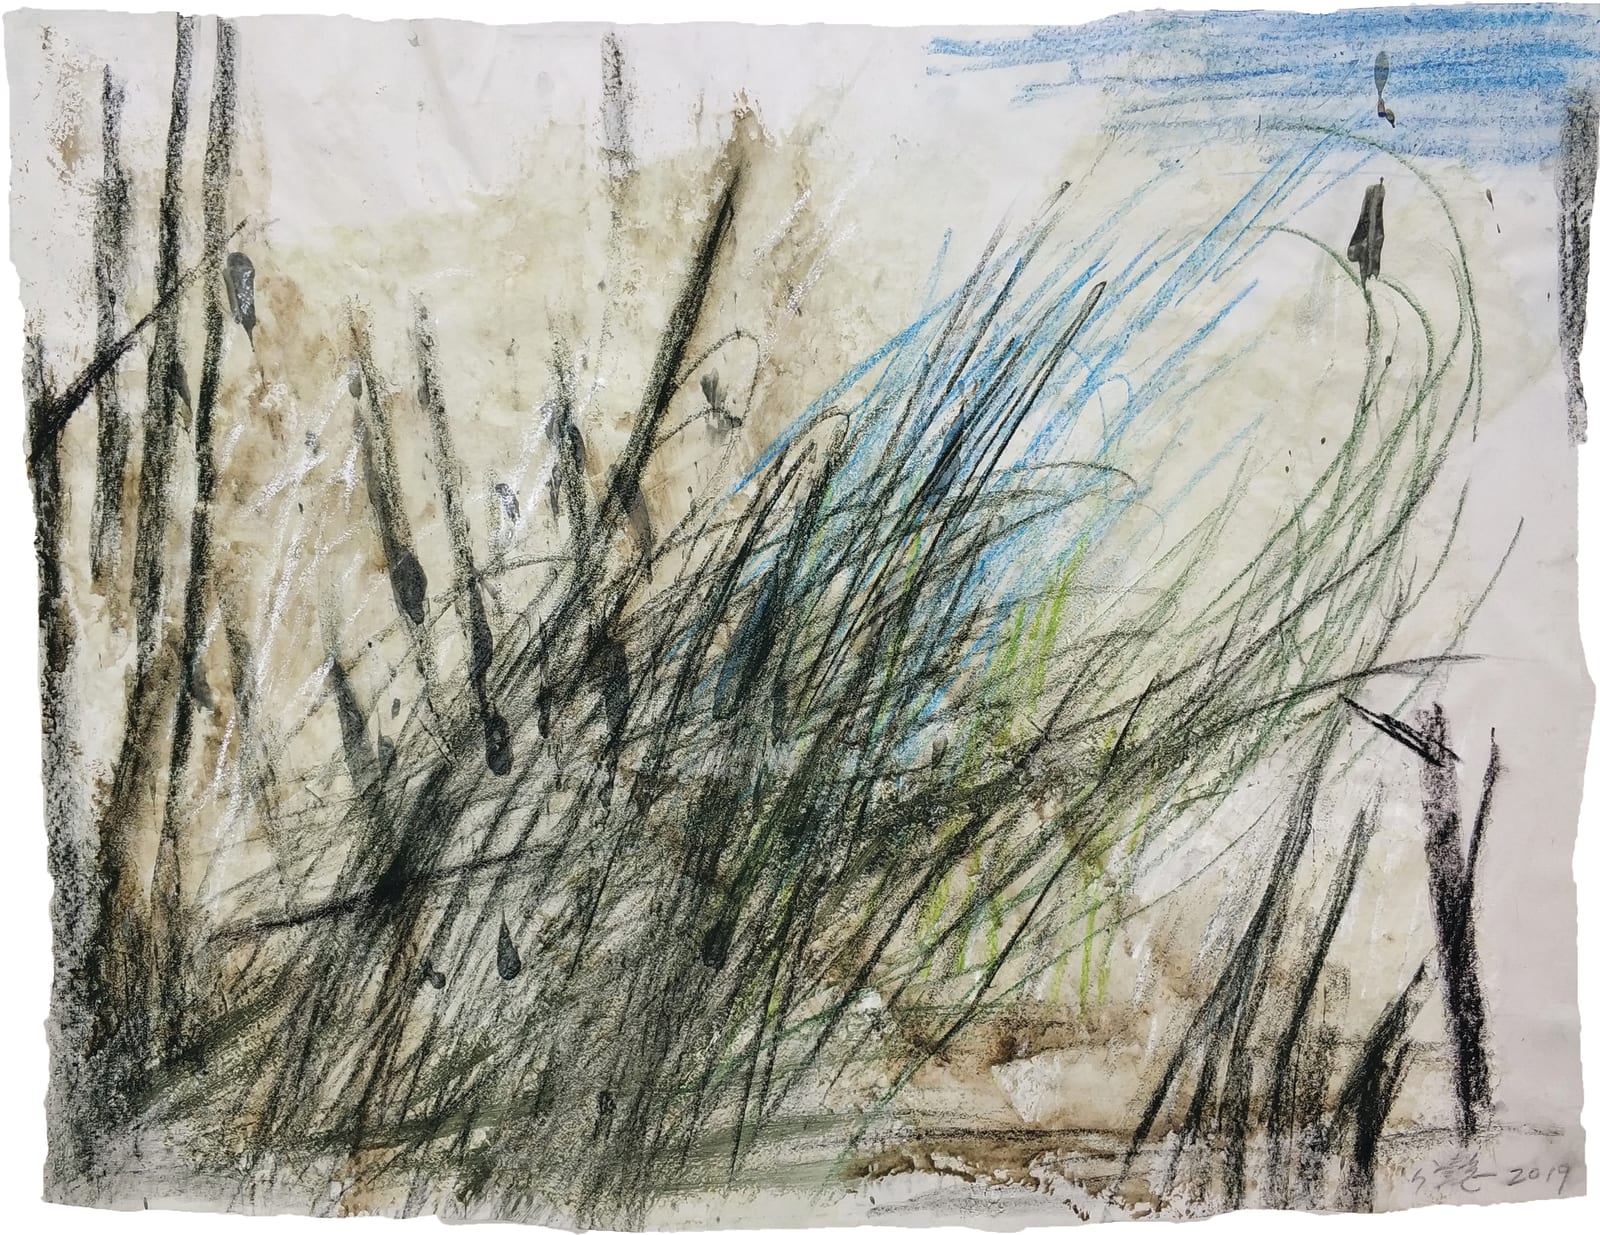 Wang Gongyi 王公懿, Leaves of Grass No. 10 草葉集之十, 2019